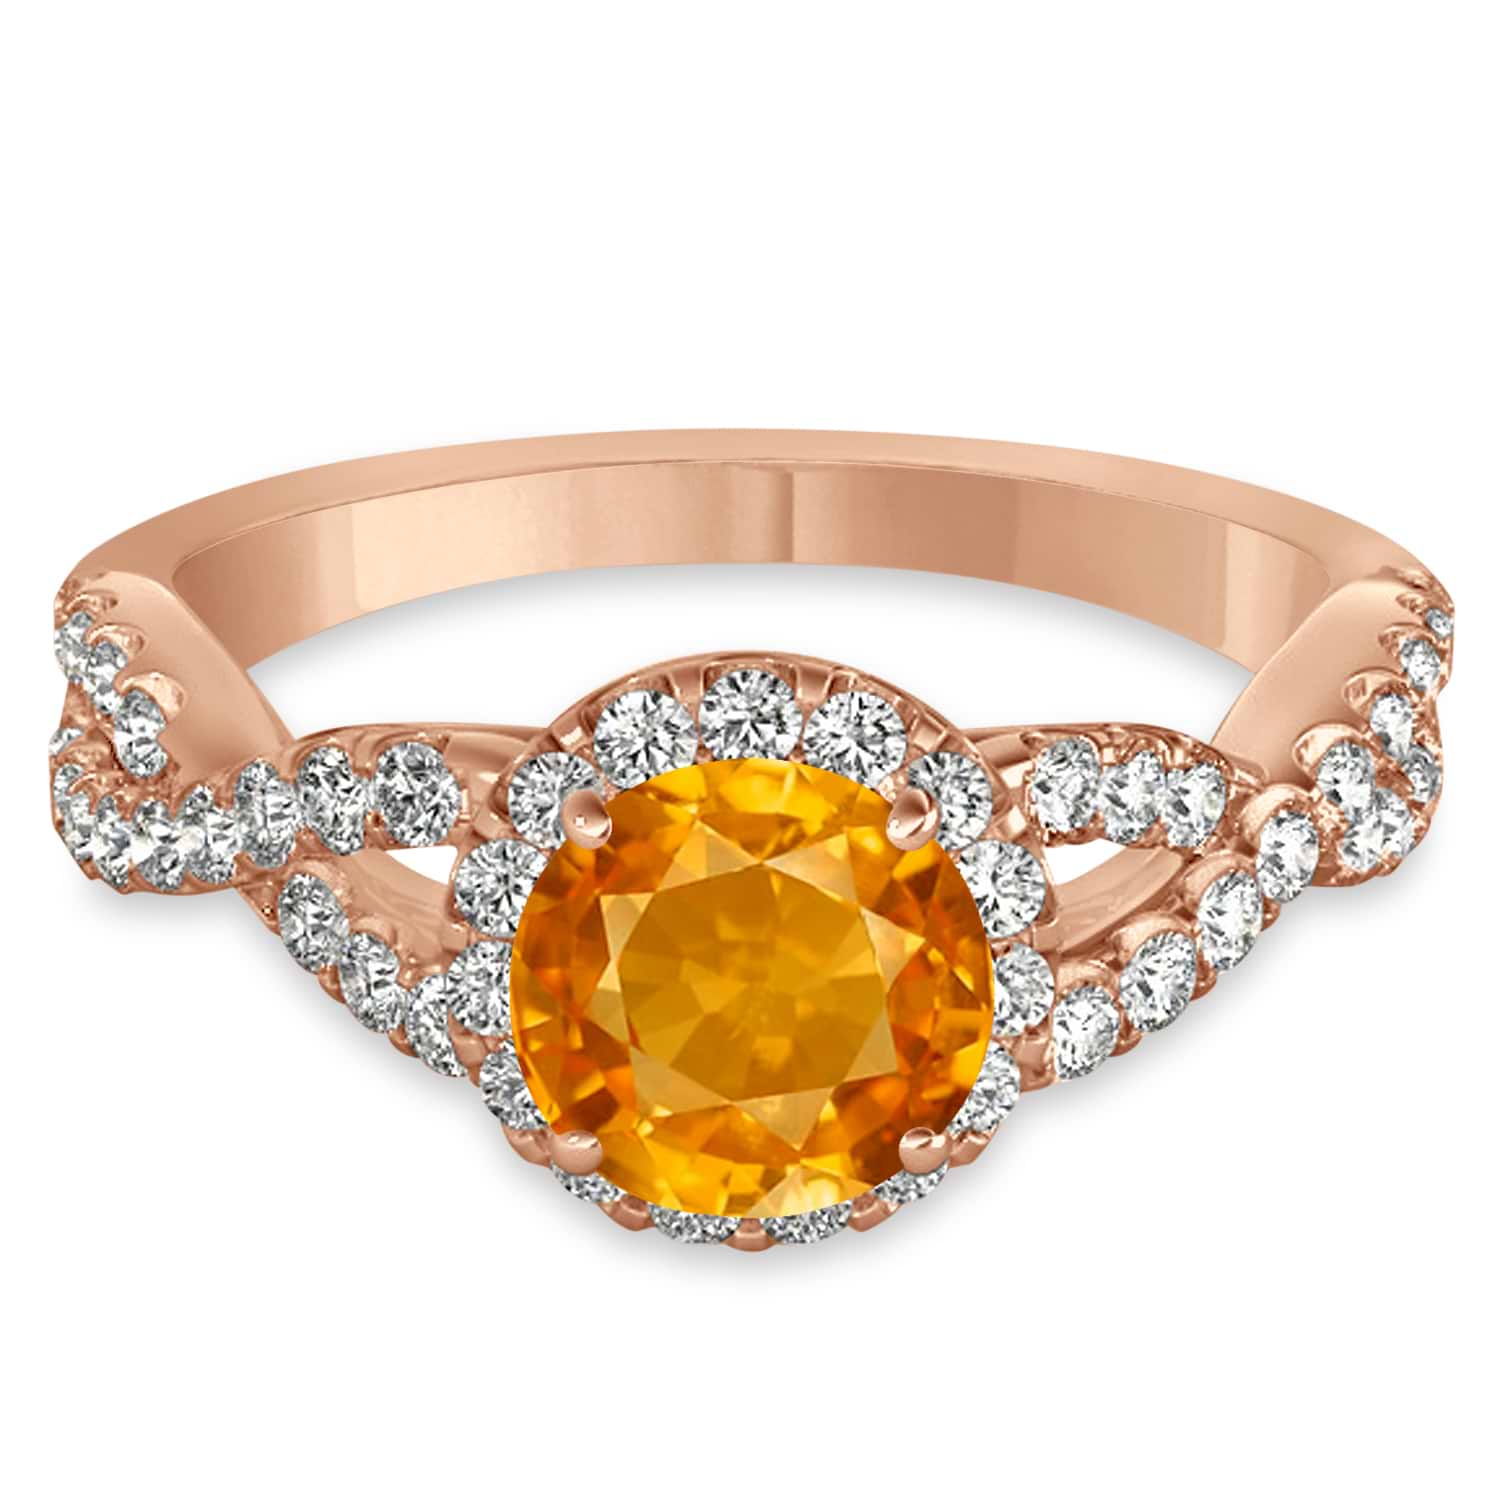 Citrine & Diamond Twisted Engagement Ring 14k Rose Gold 1.20ct